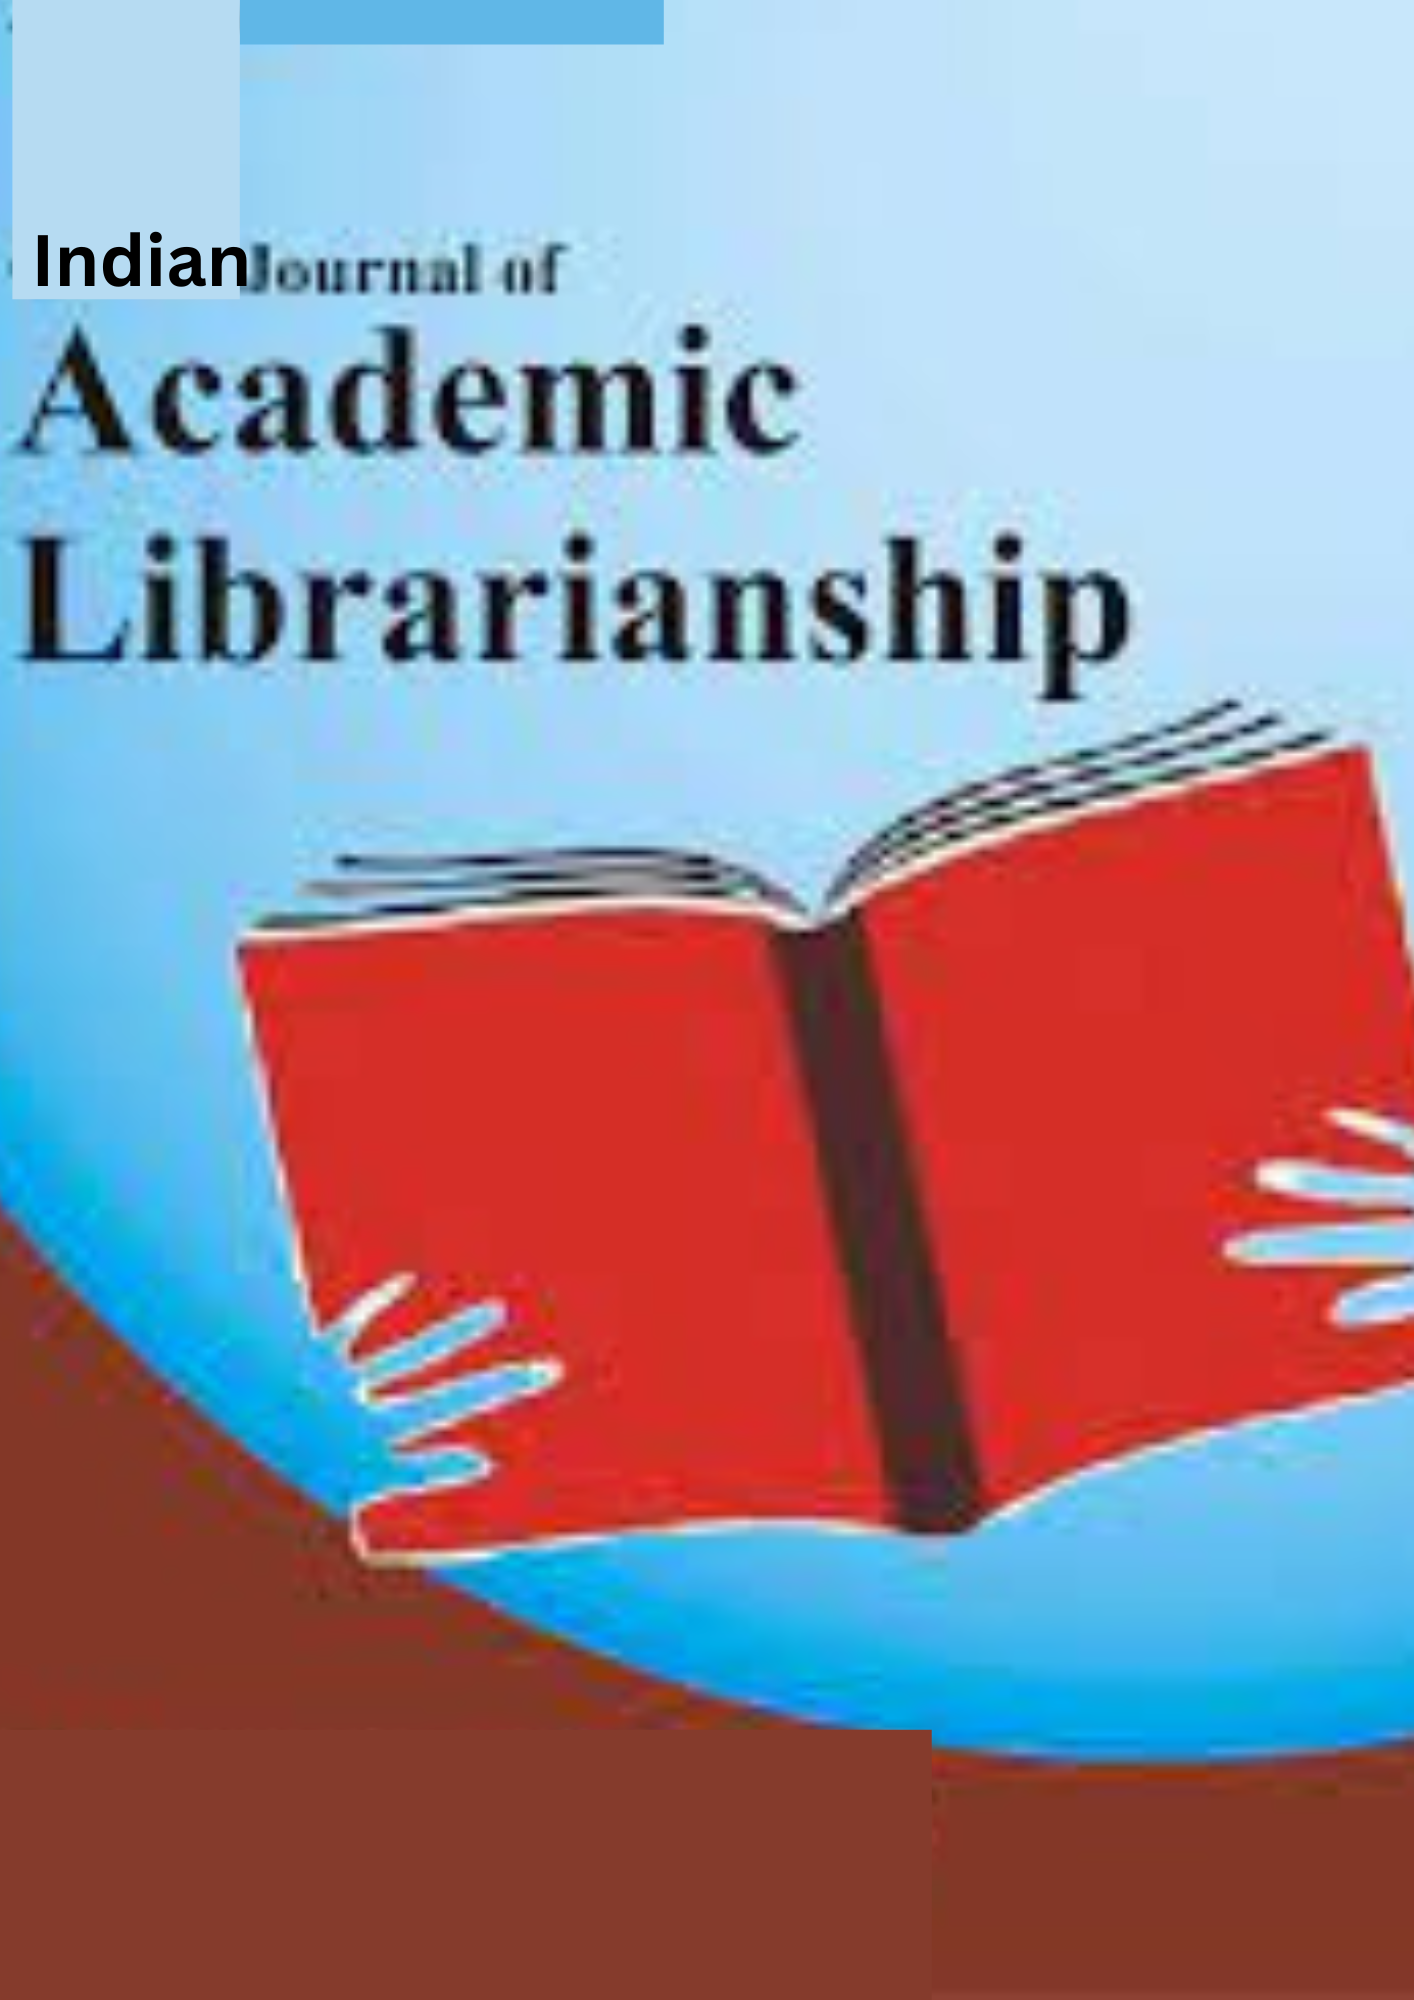 Indian Journal of Academic Librarianship